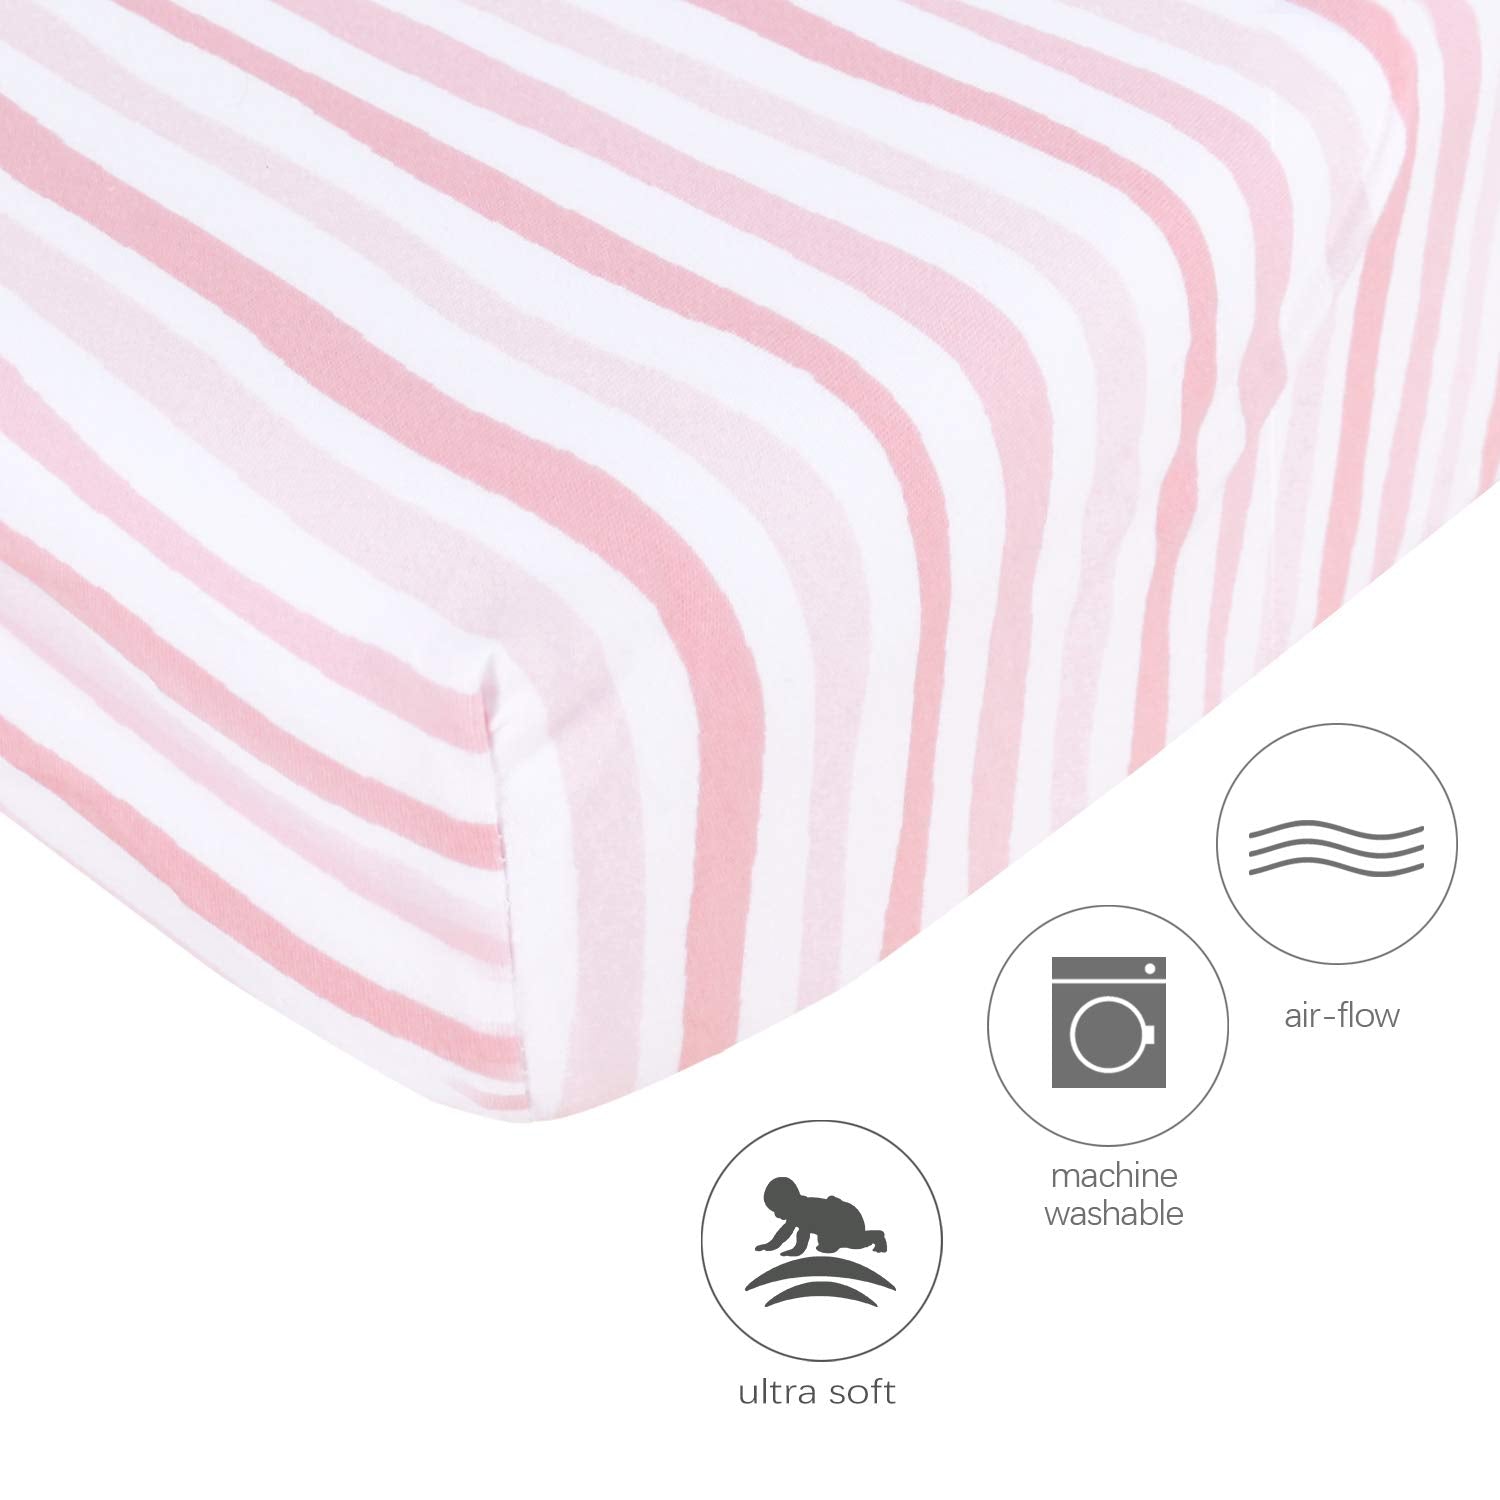 Crib Sheets - 2 Pack, 100% Jersey Cotton, Grey & White (for Standard Crib) - Biloban Online Store